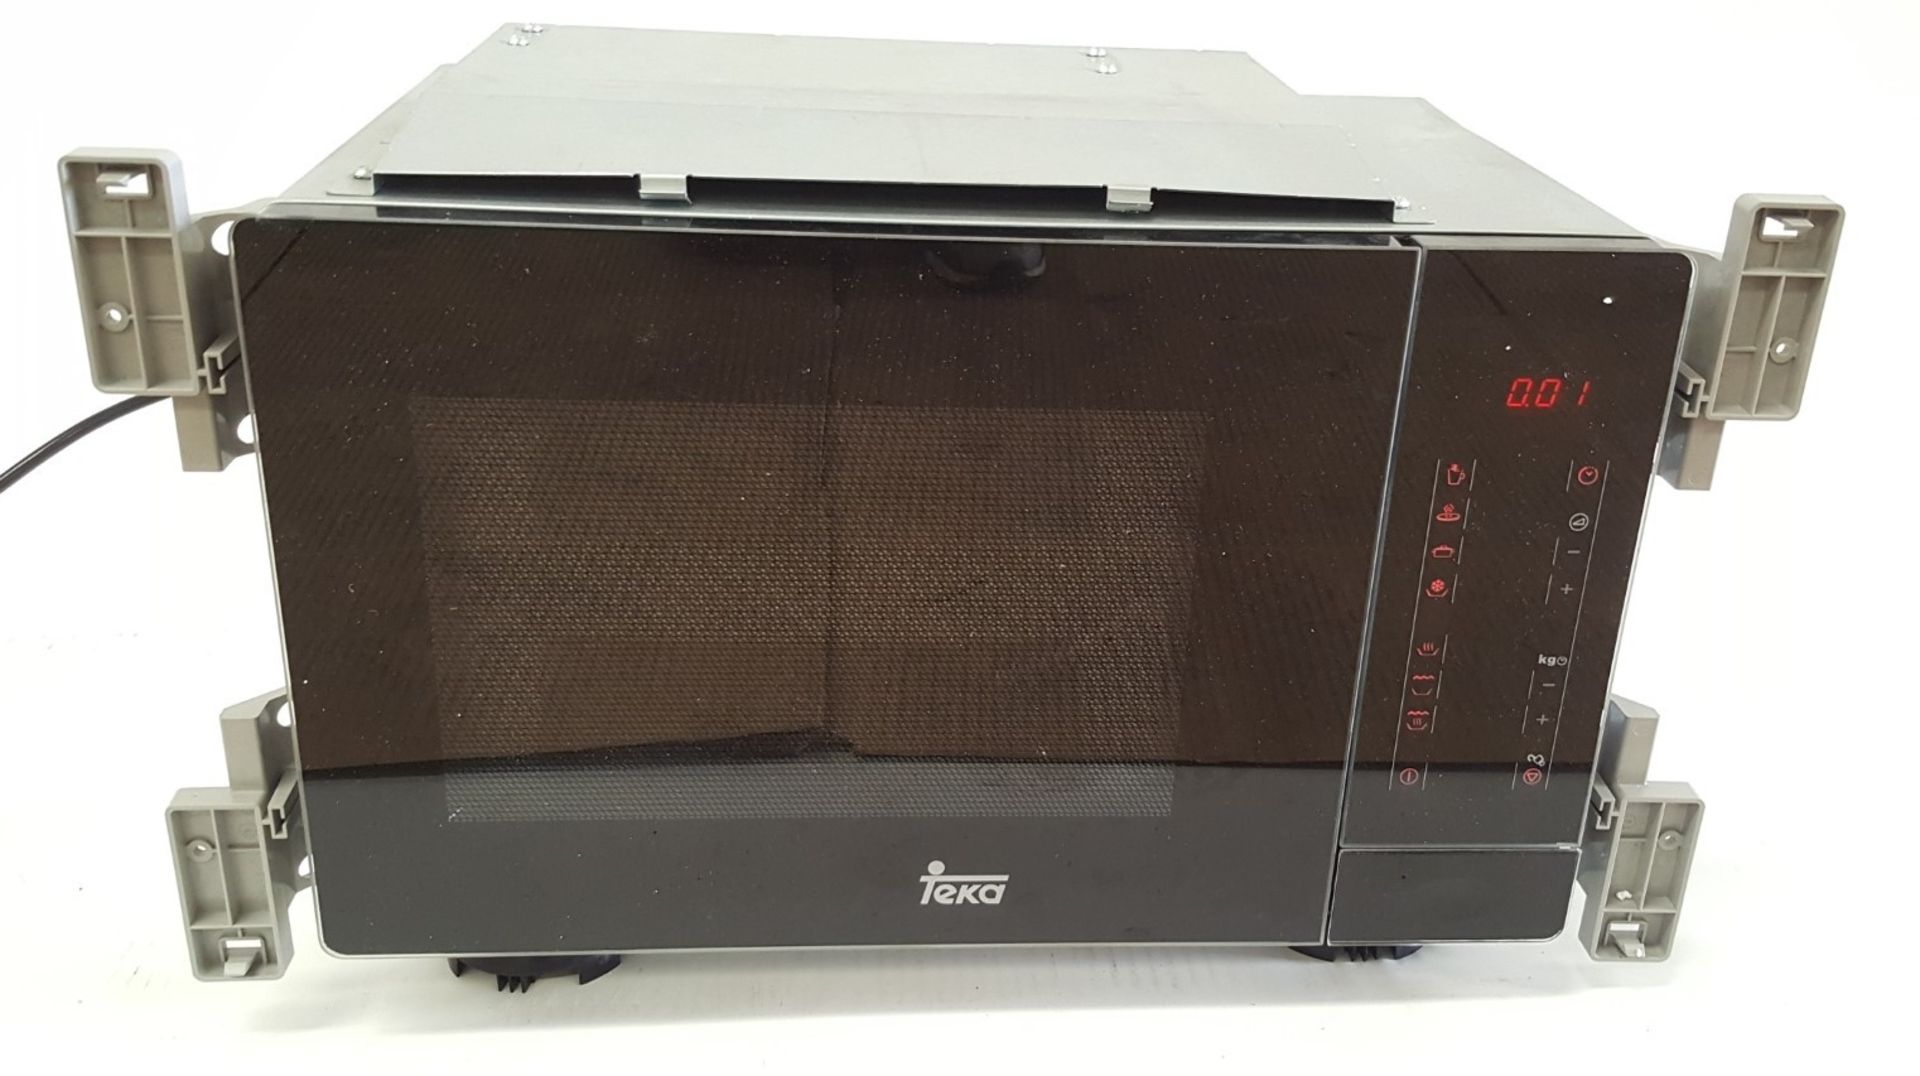 1 x Teka MWL 20 BIT Built-in Microwave - Ref BY158